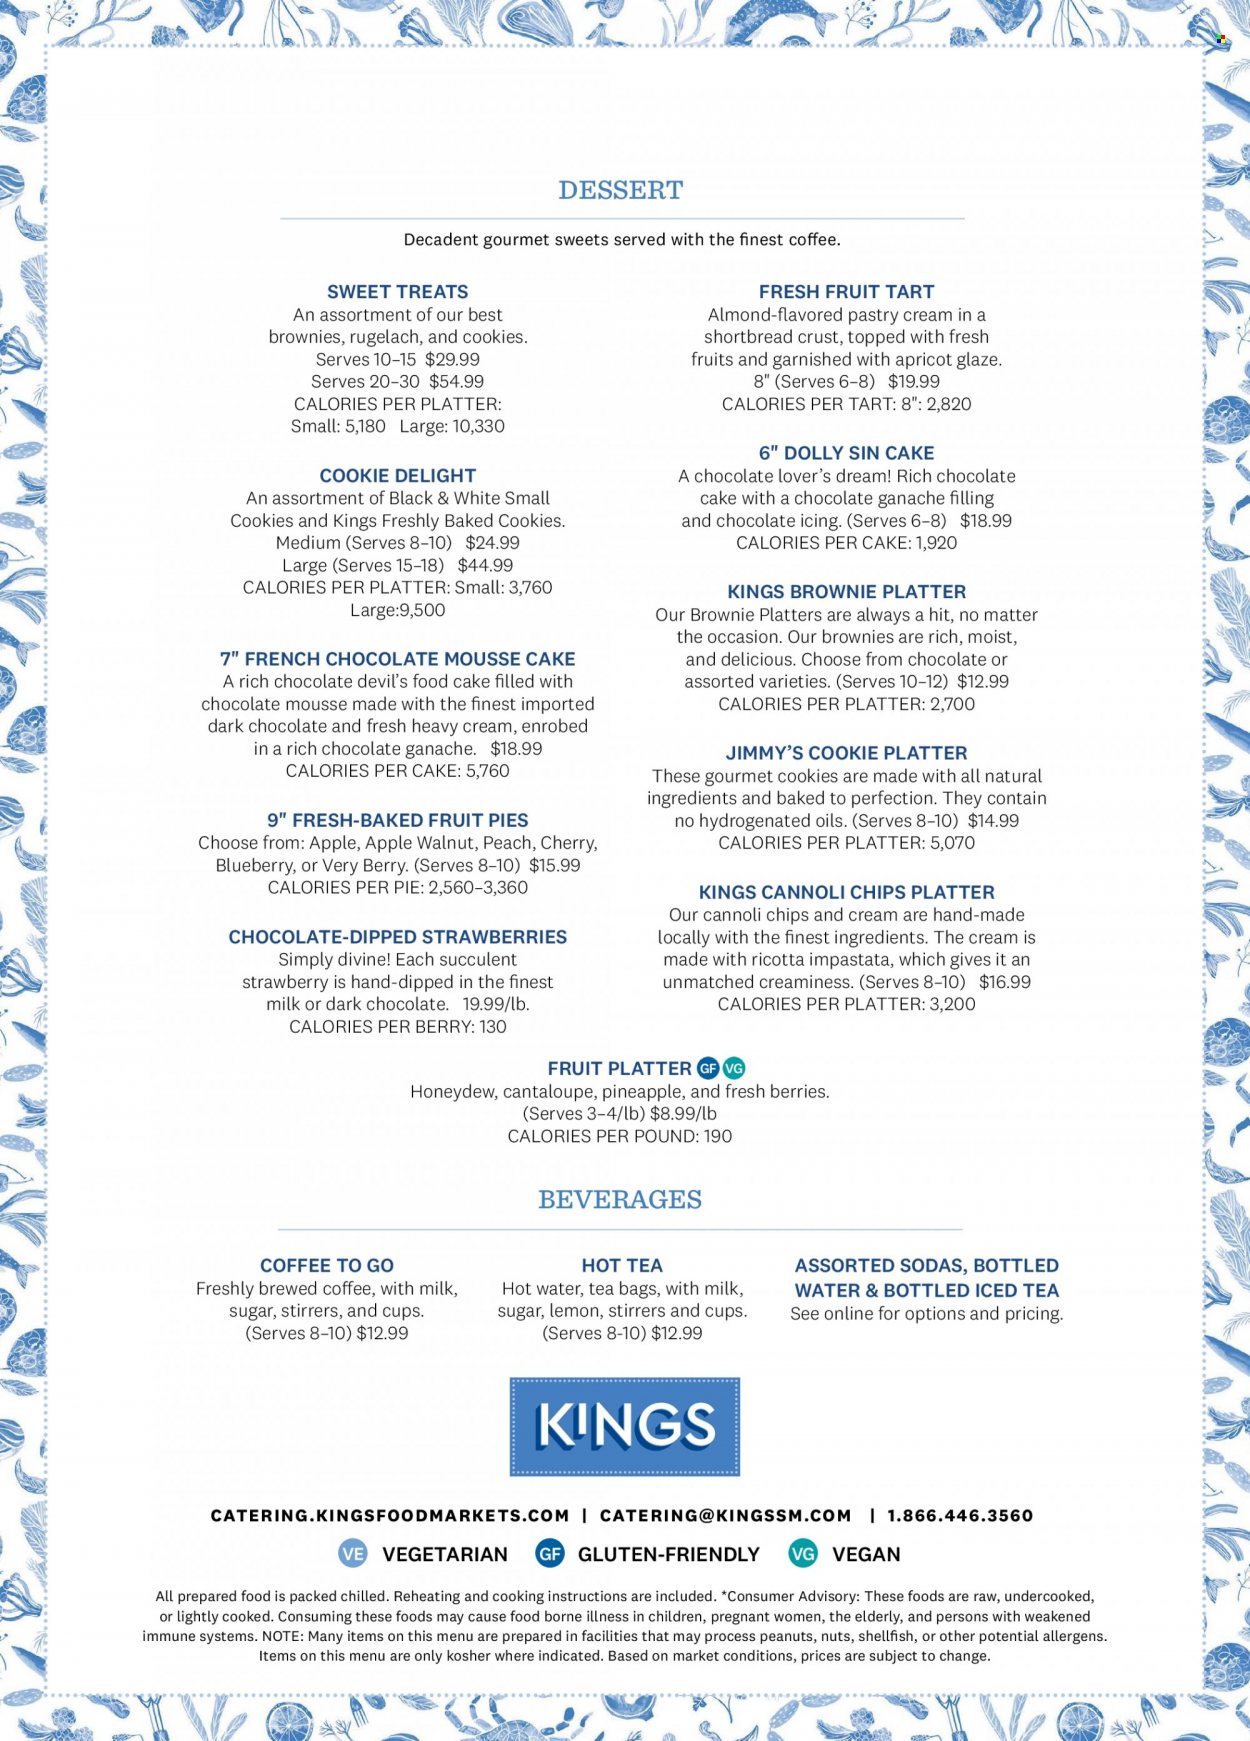 Kings Food Markets ad .